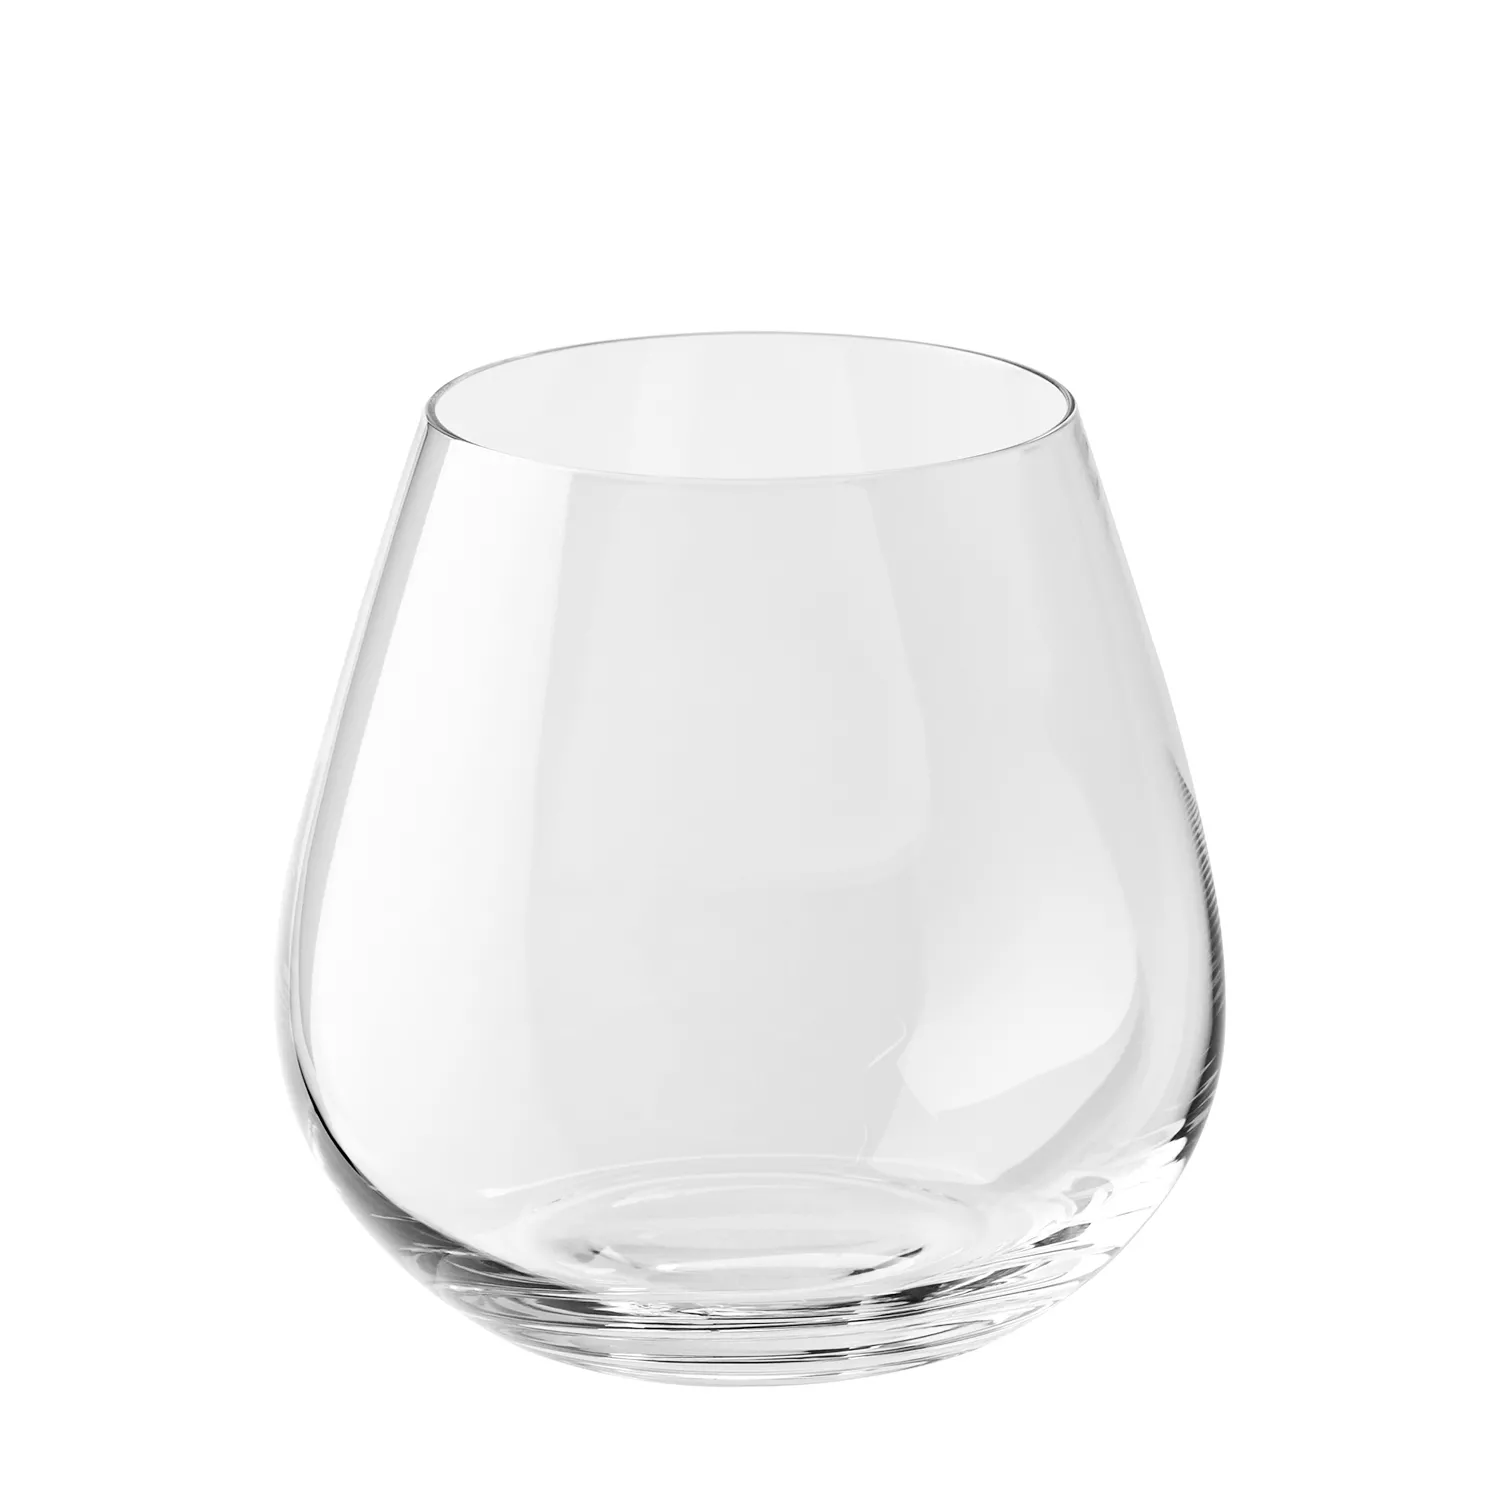 Buy ZWILLING Sorrento Bar Whisky glass set